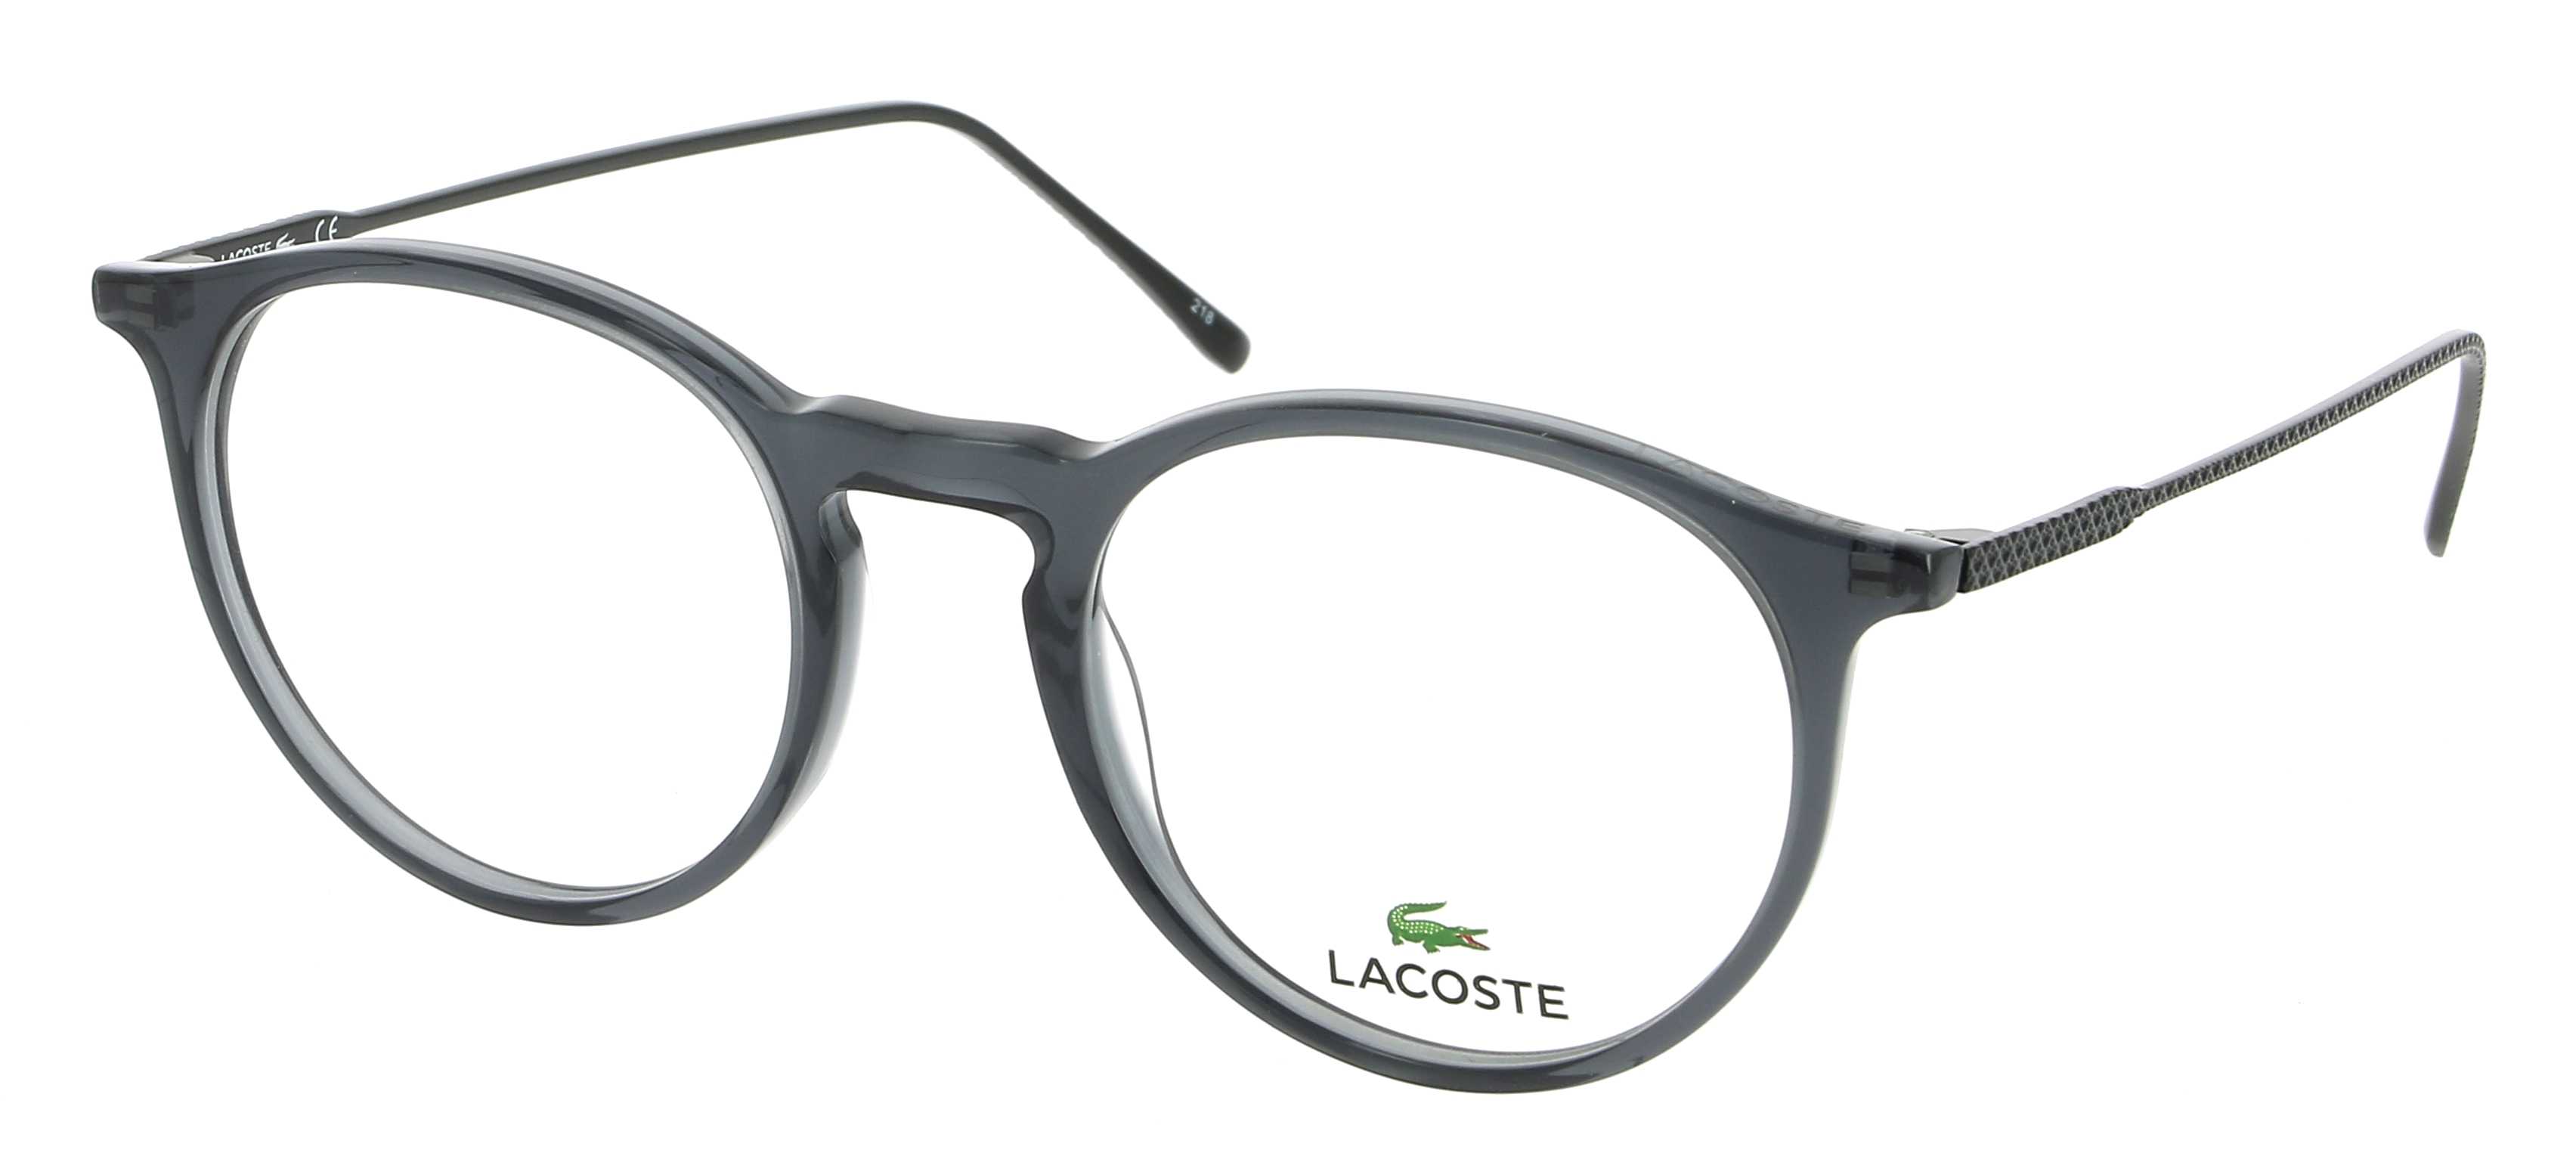 lacoste round glasses